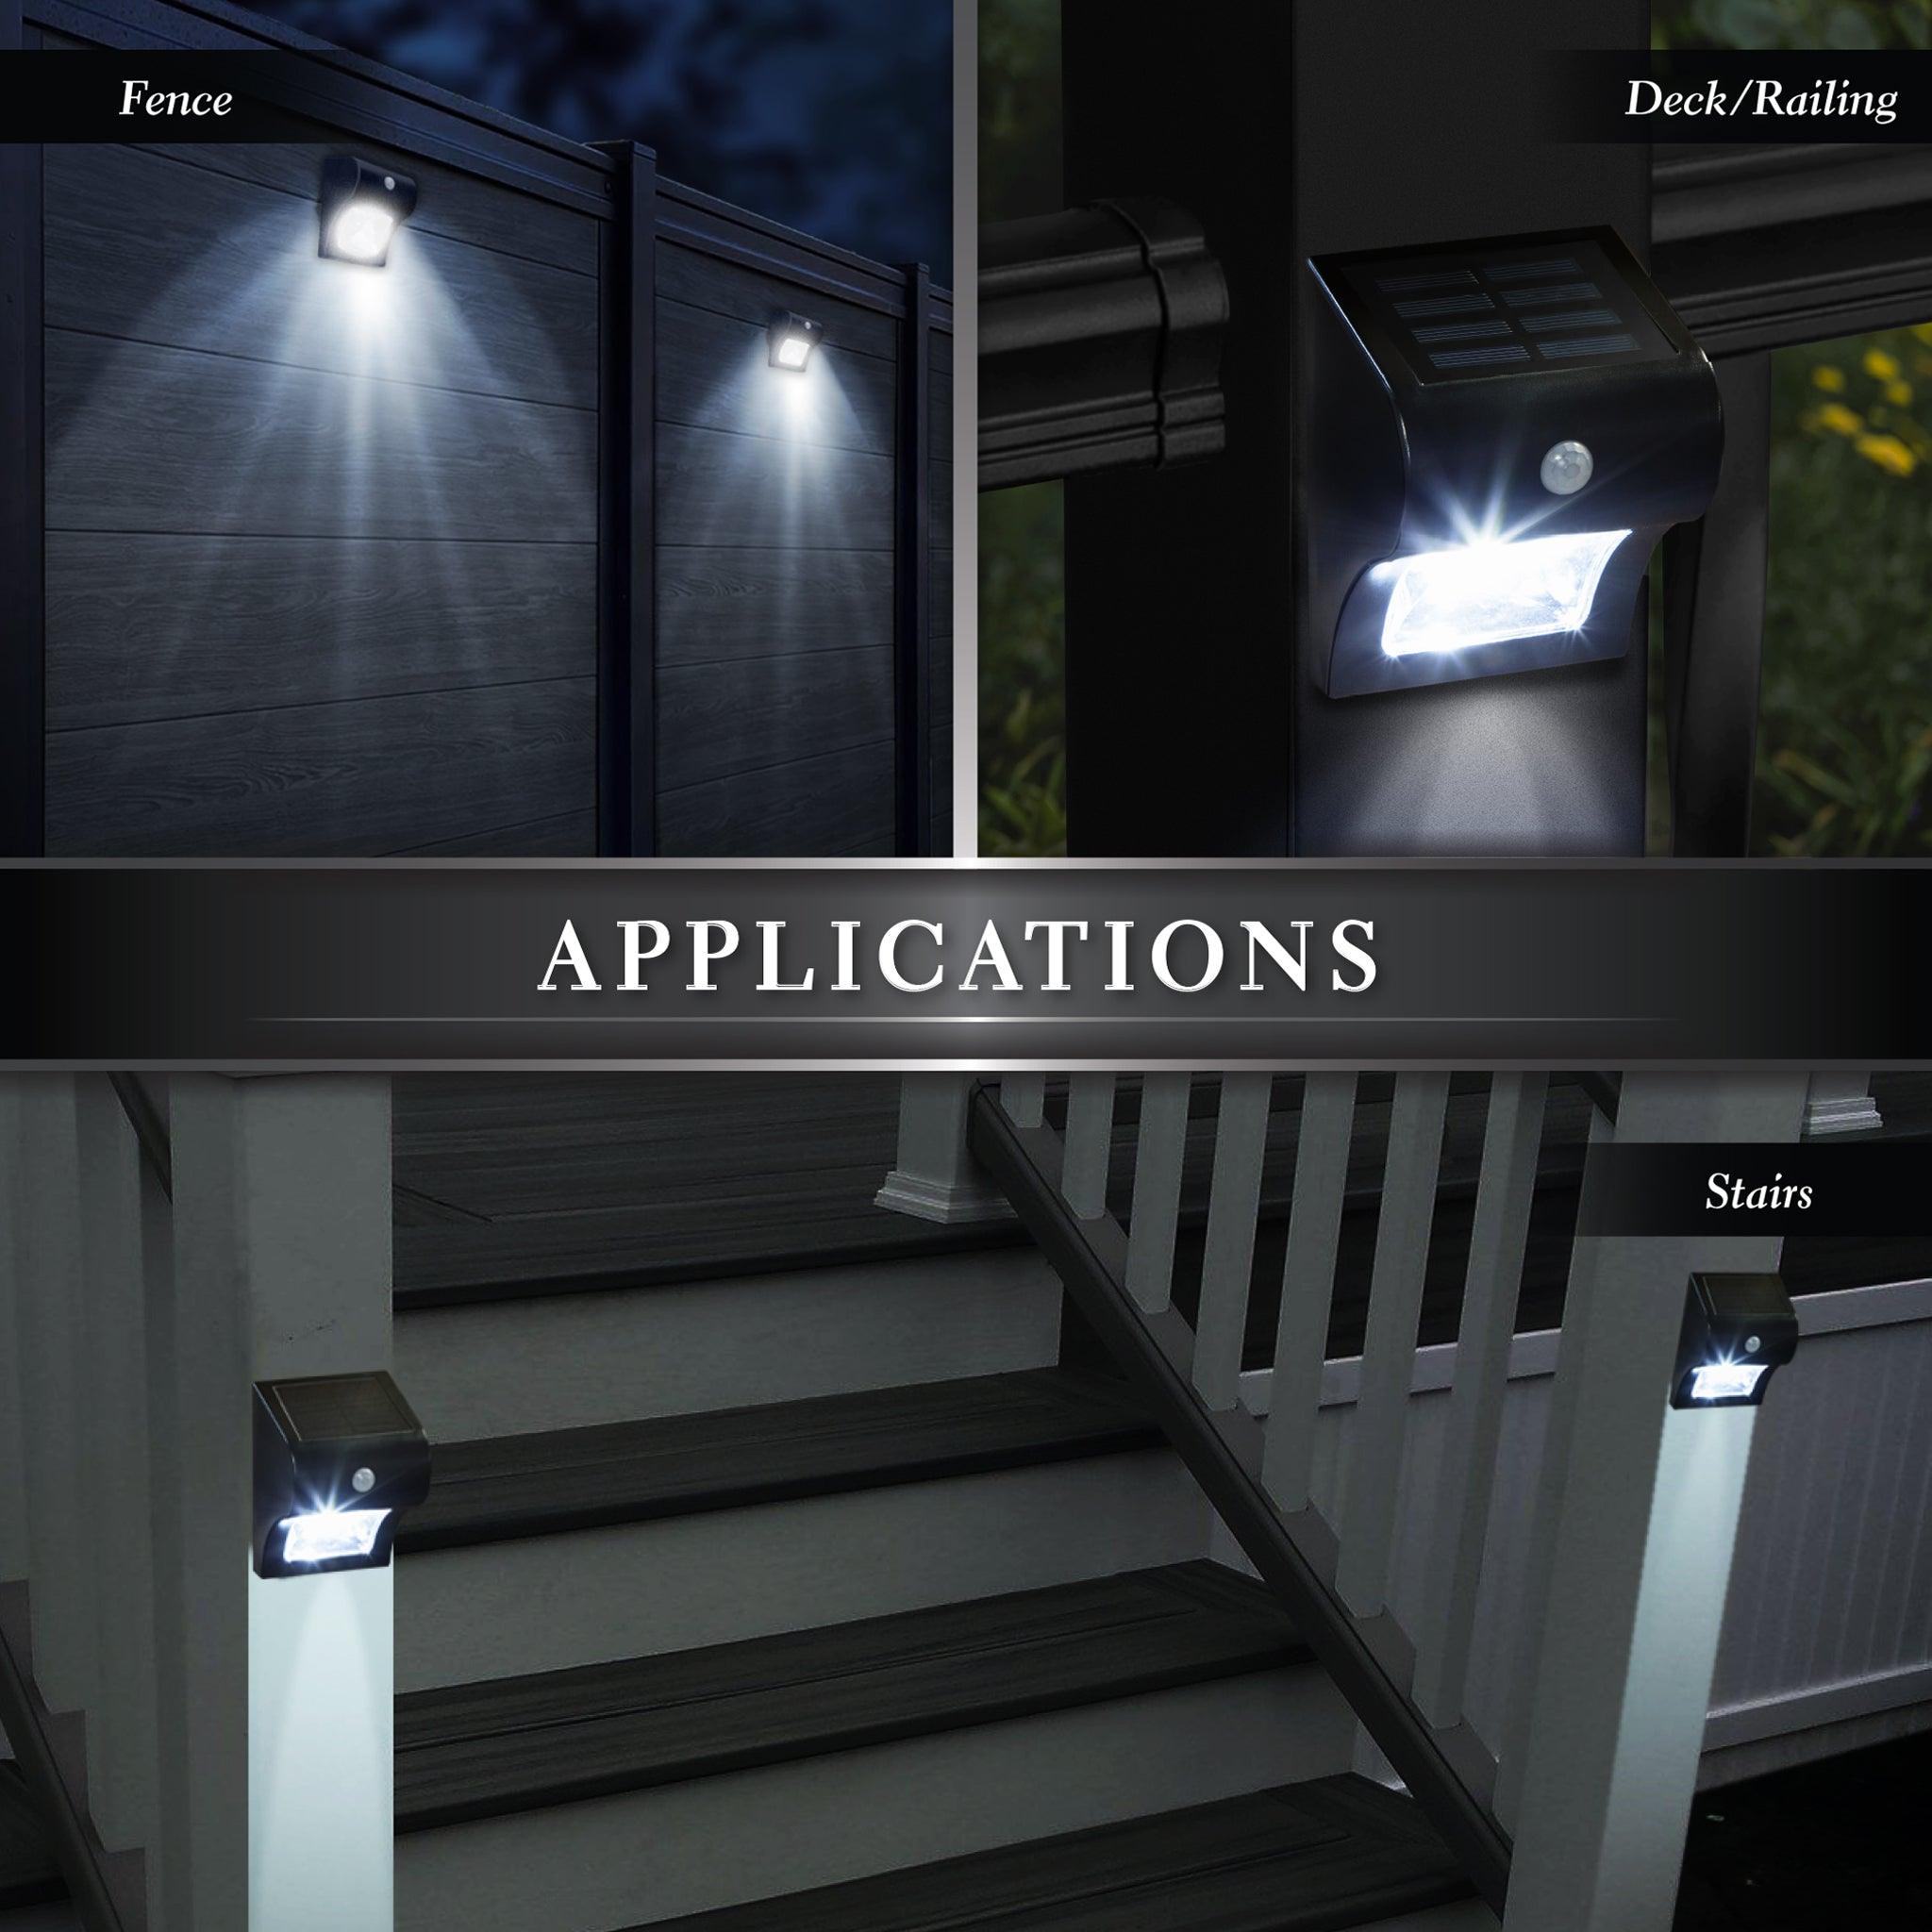 Solar Motion Sensor Deck & Wall Light - Classy Caps Mfg. Inc.